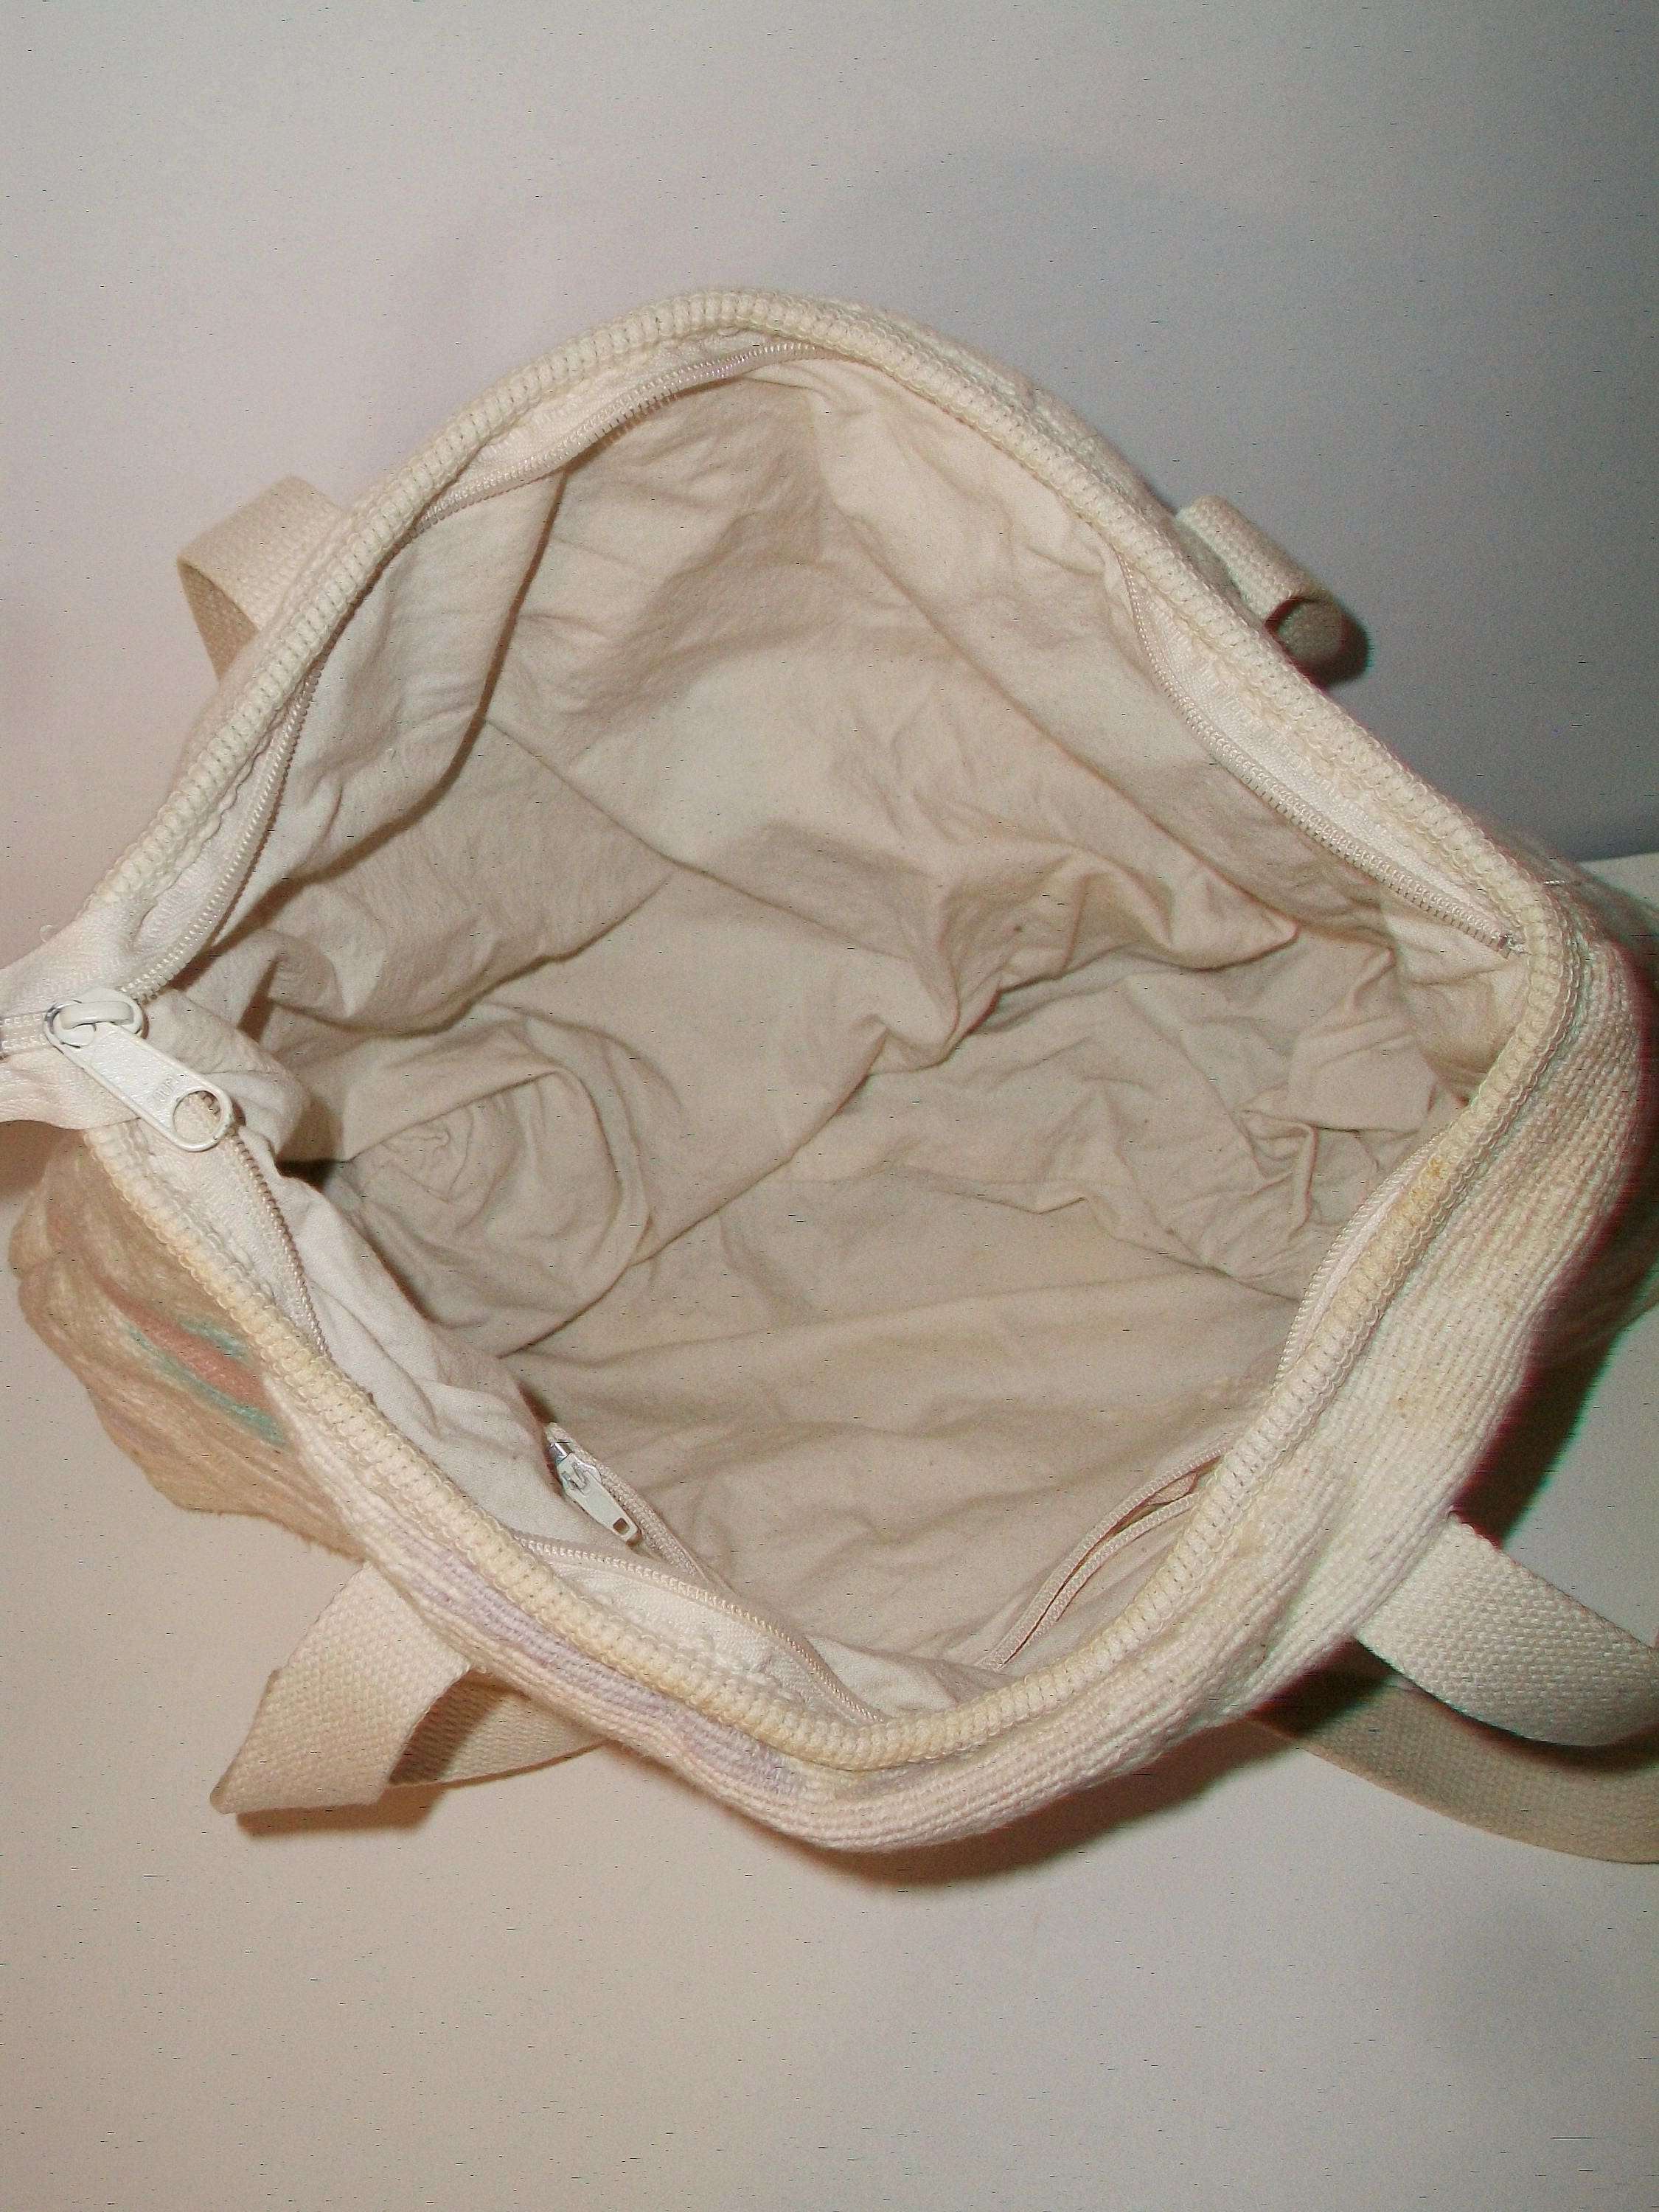 Santa Fe Style Bag New Mexico Southwestern Pastel Cloth Purse | Etsy